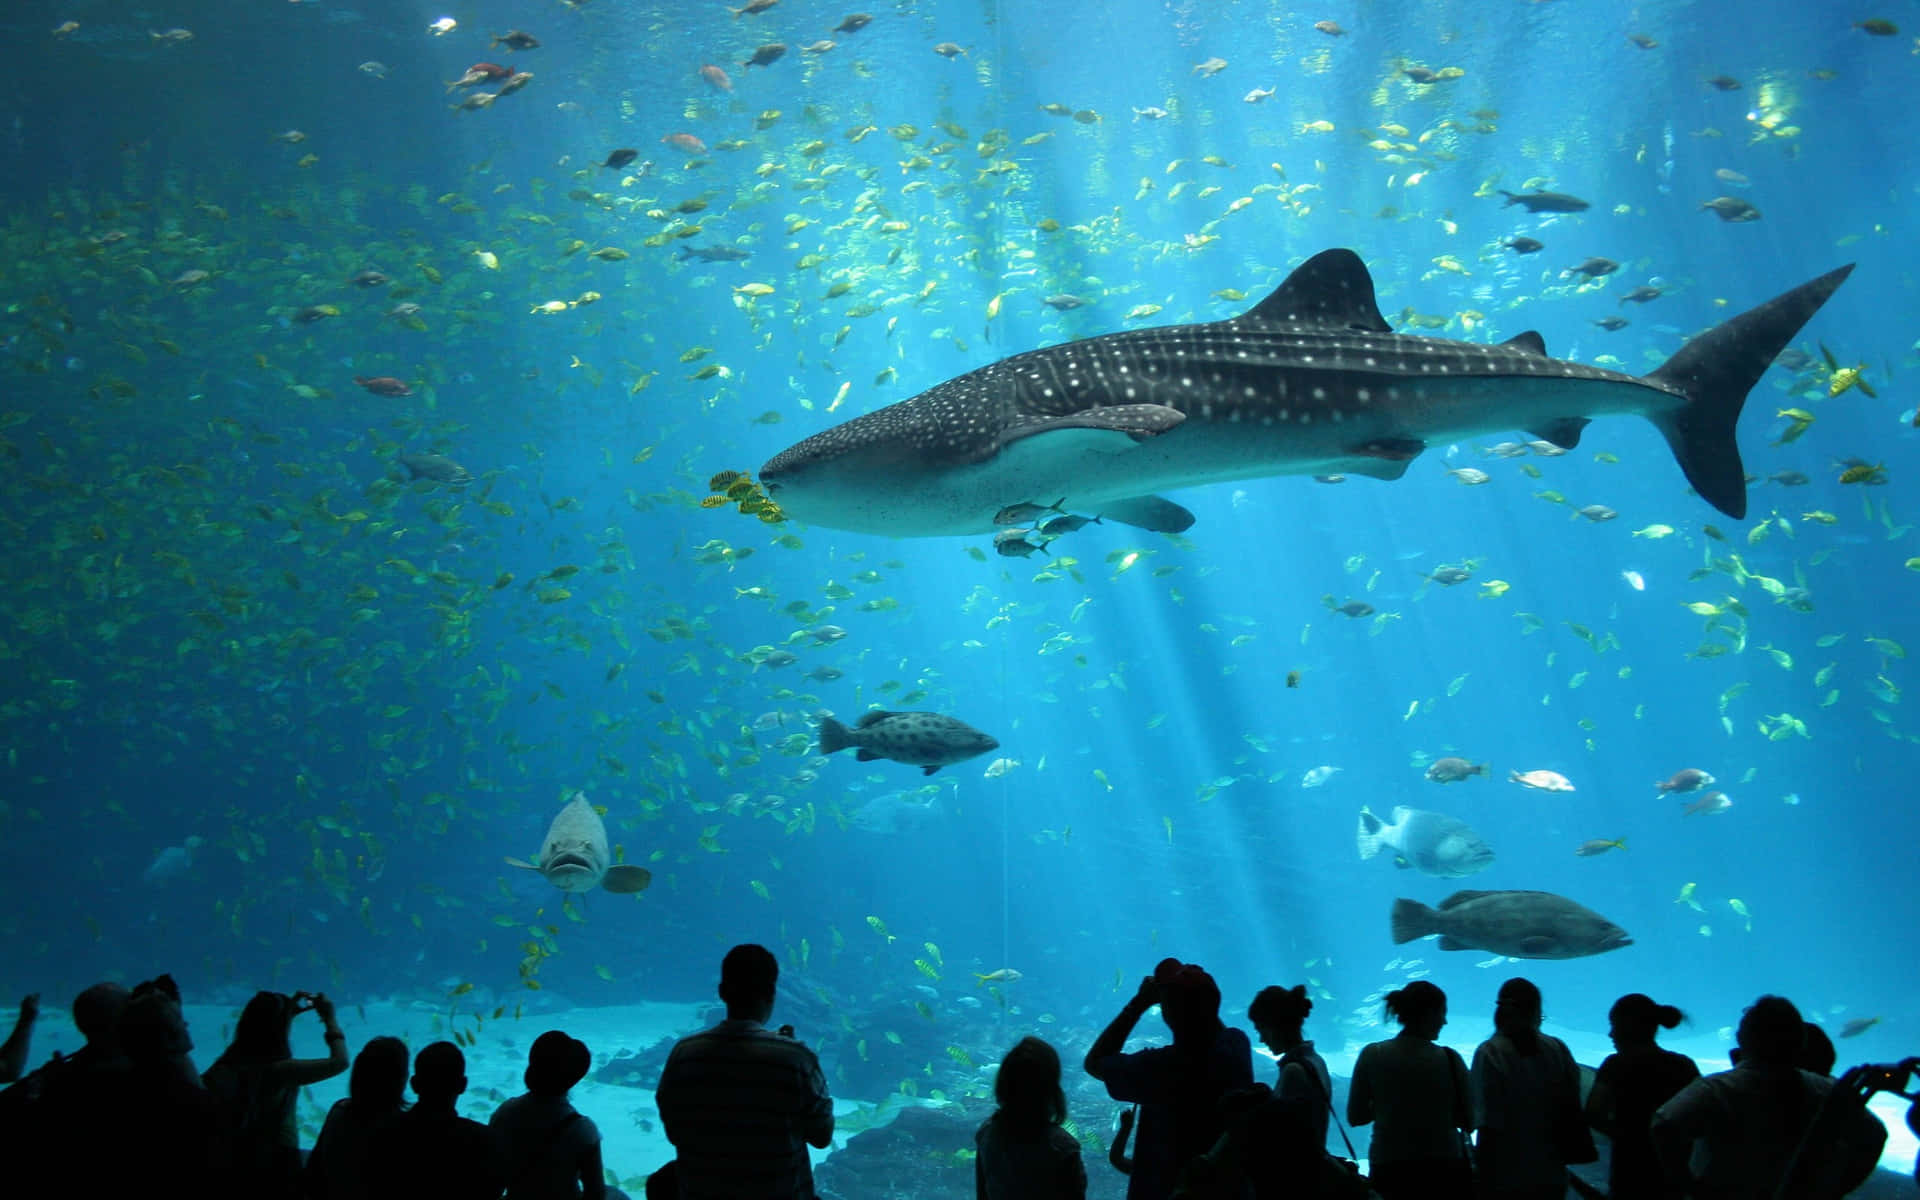 Enjoy the beauty of a vast oceanic ecosystem inside a man-made aquarium.